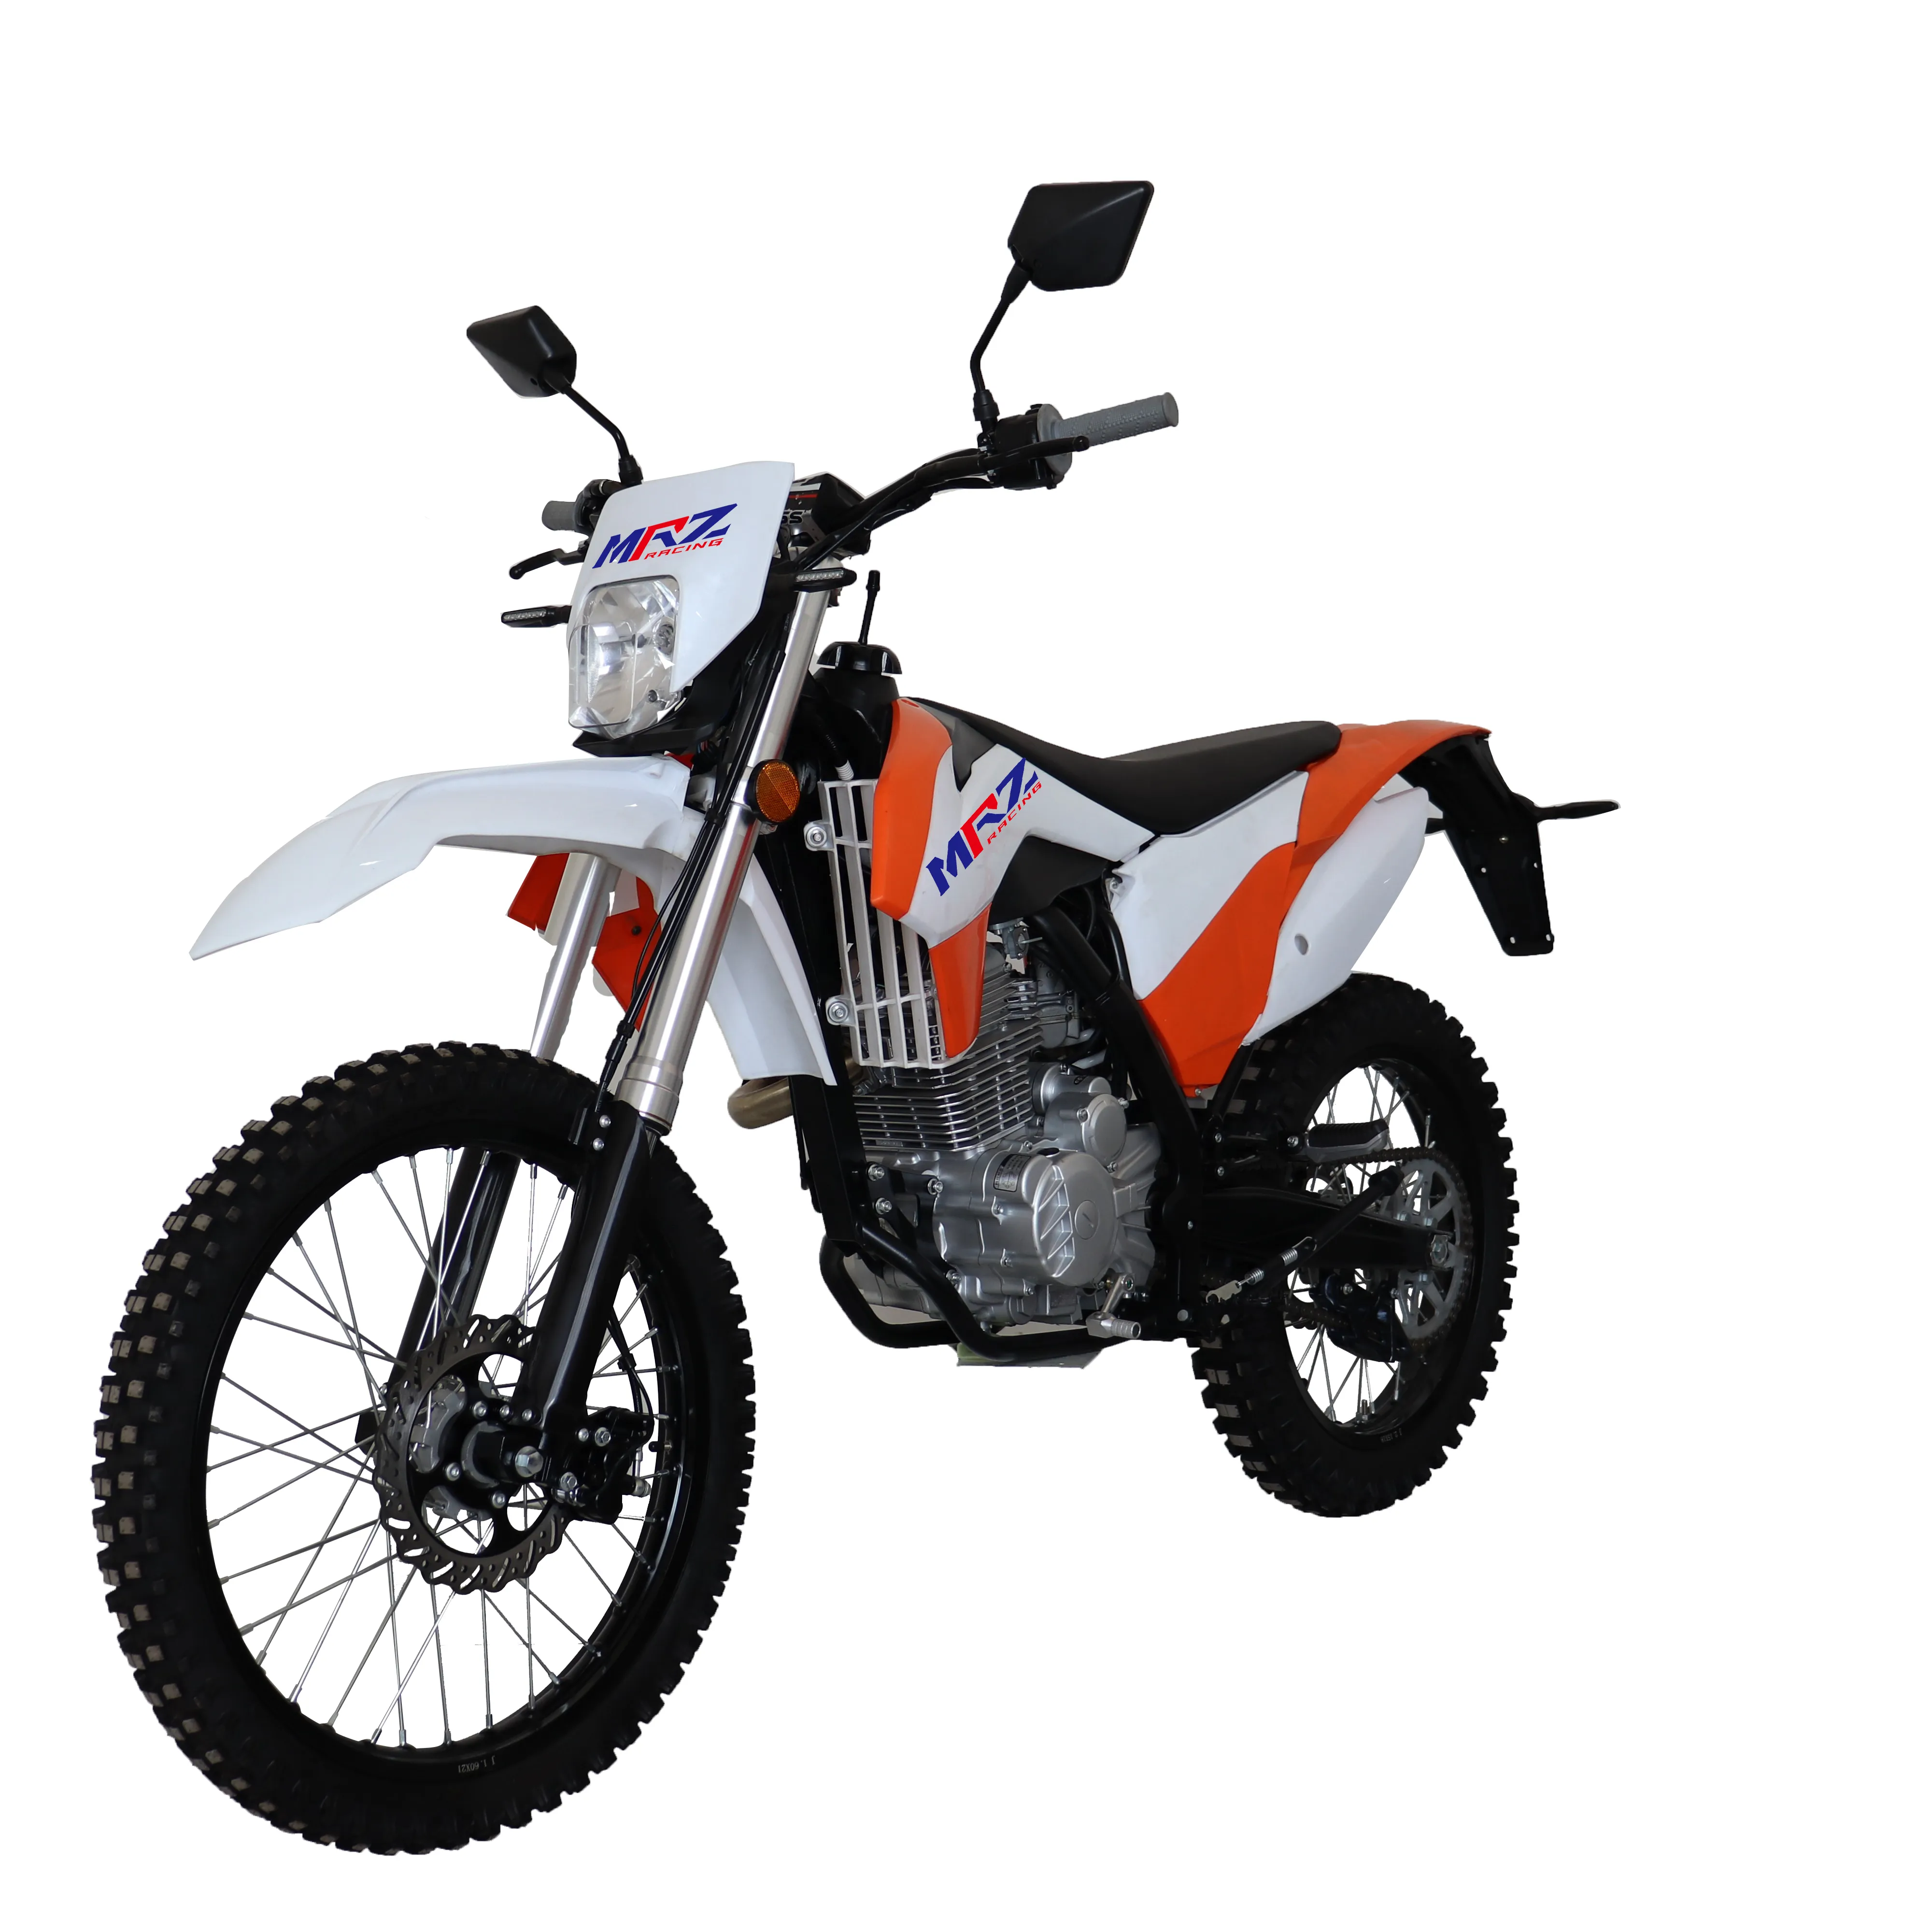 Nuovo automatico gas moto cross dirtbike motor trail dirt bike KTM 250cc benzina motocross fuoristrada moto con motore zongshen